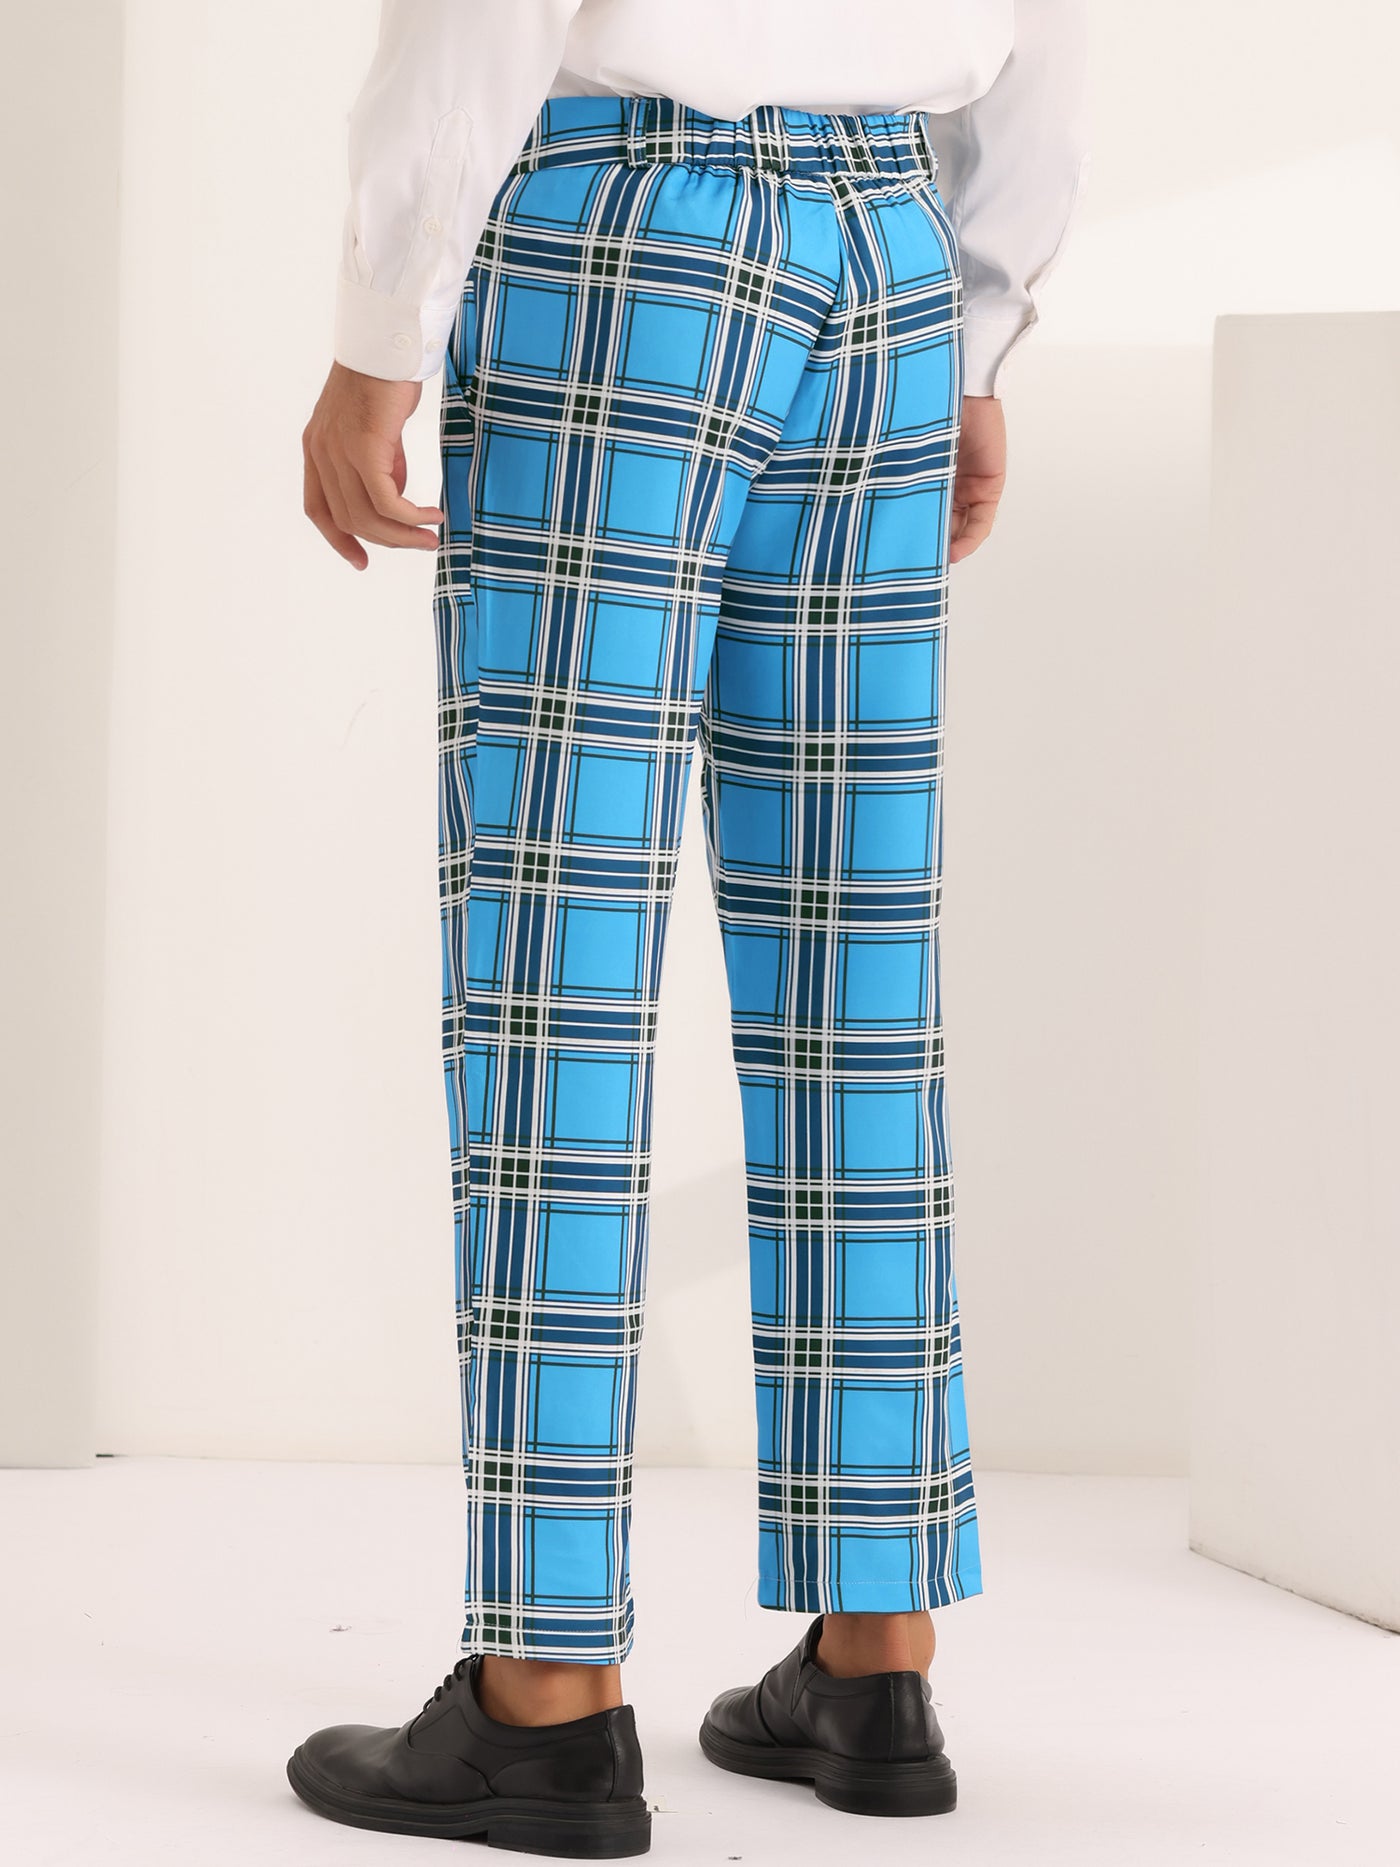 Bublédon Business Plaid Pants for Men's Slim Fit Flat Front Wedding Checked Trousers